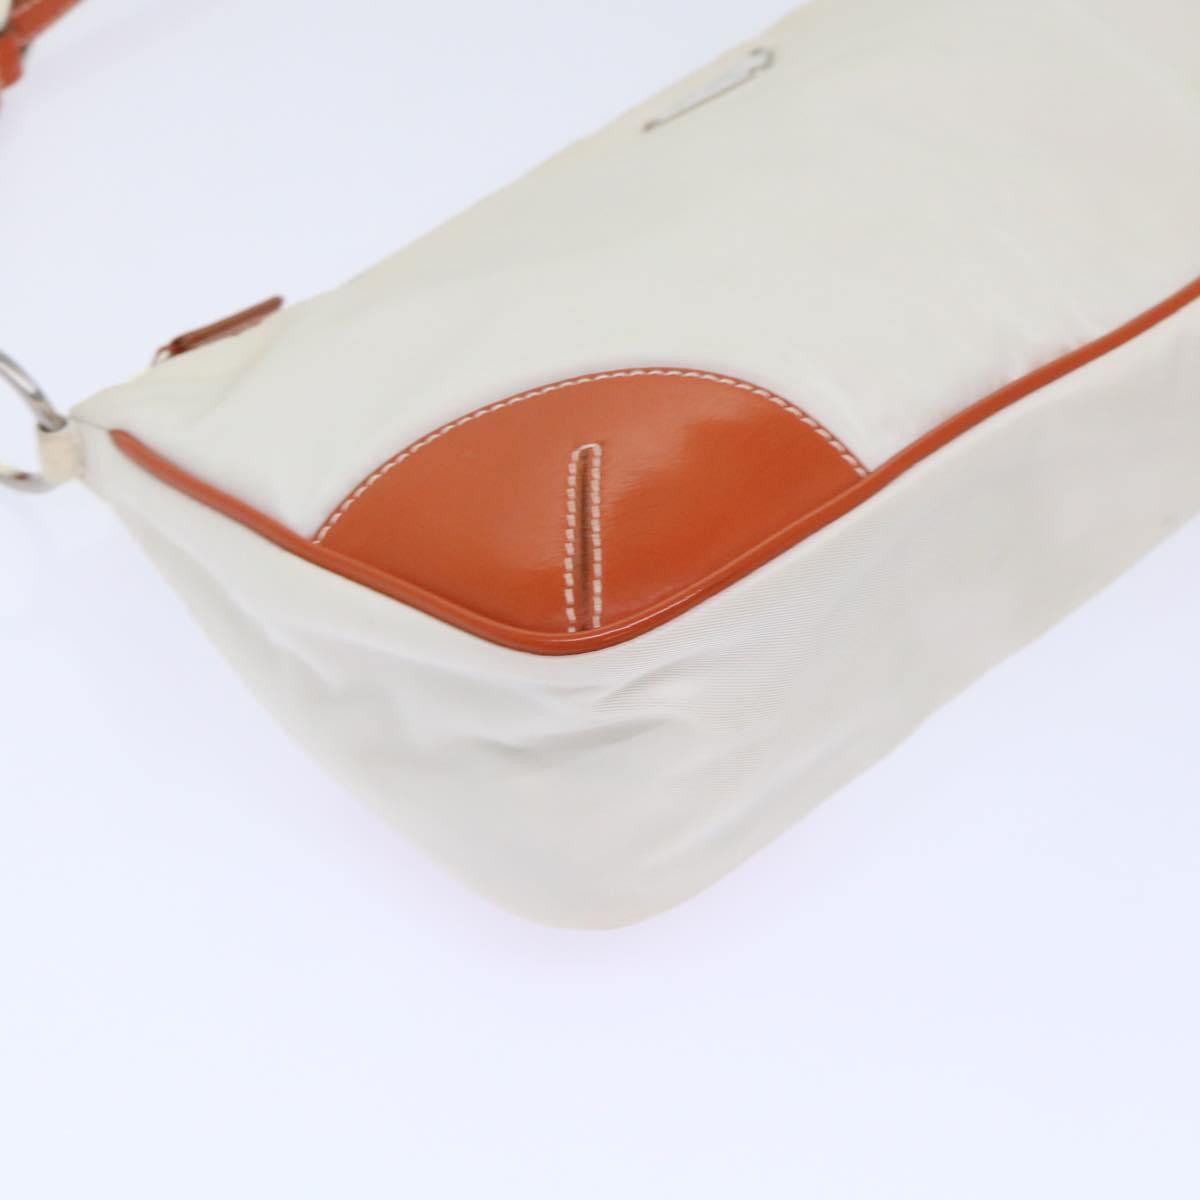 PRADA Shoulder Bag Nylon Leather White Orange Auth 50398